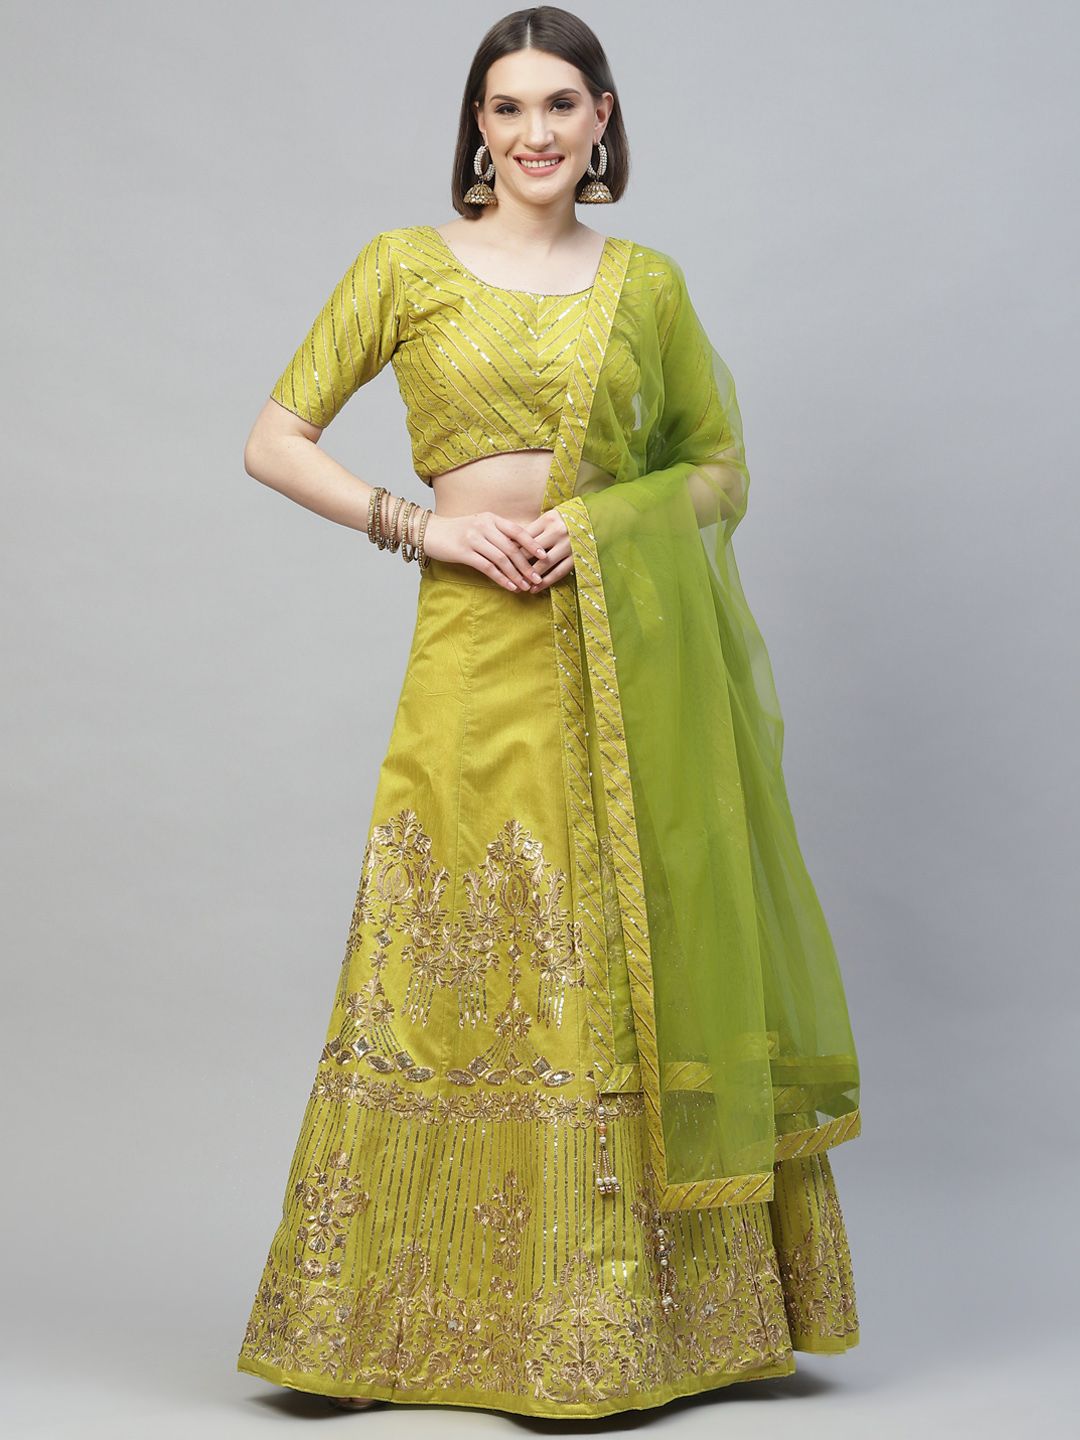 SHUBHVASTRA Green Embellished Semi-Stitched Lehenga & Unstitched Blouse With Dupatta Price in India